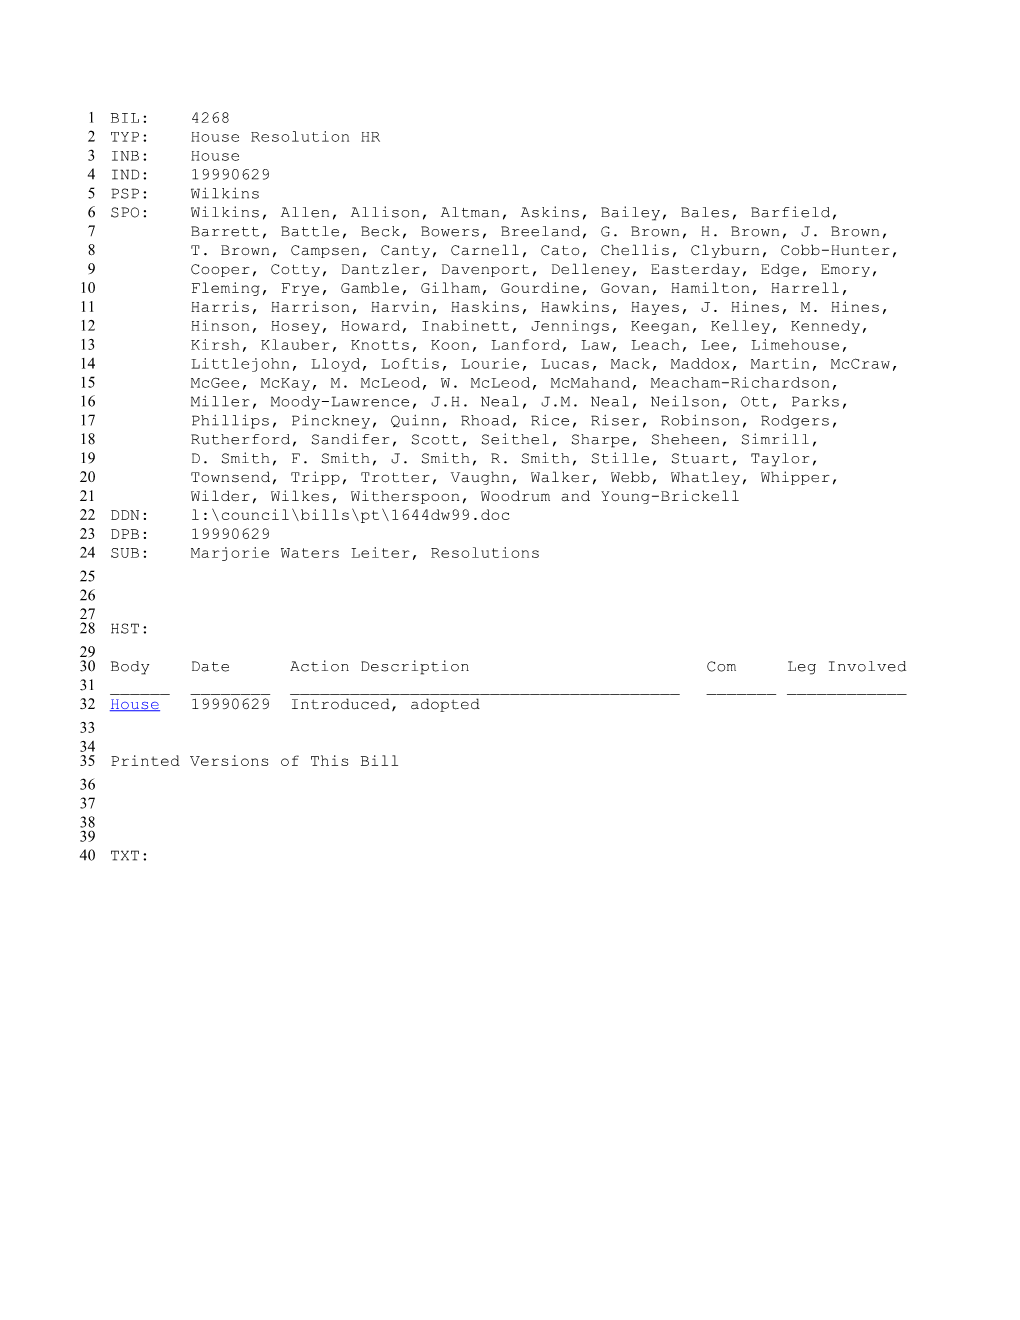 1999-2000 Bill 4268: Marjorie Waters Leiter, Resolutions - South Carolina Legislature Online